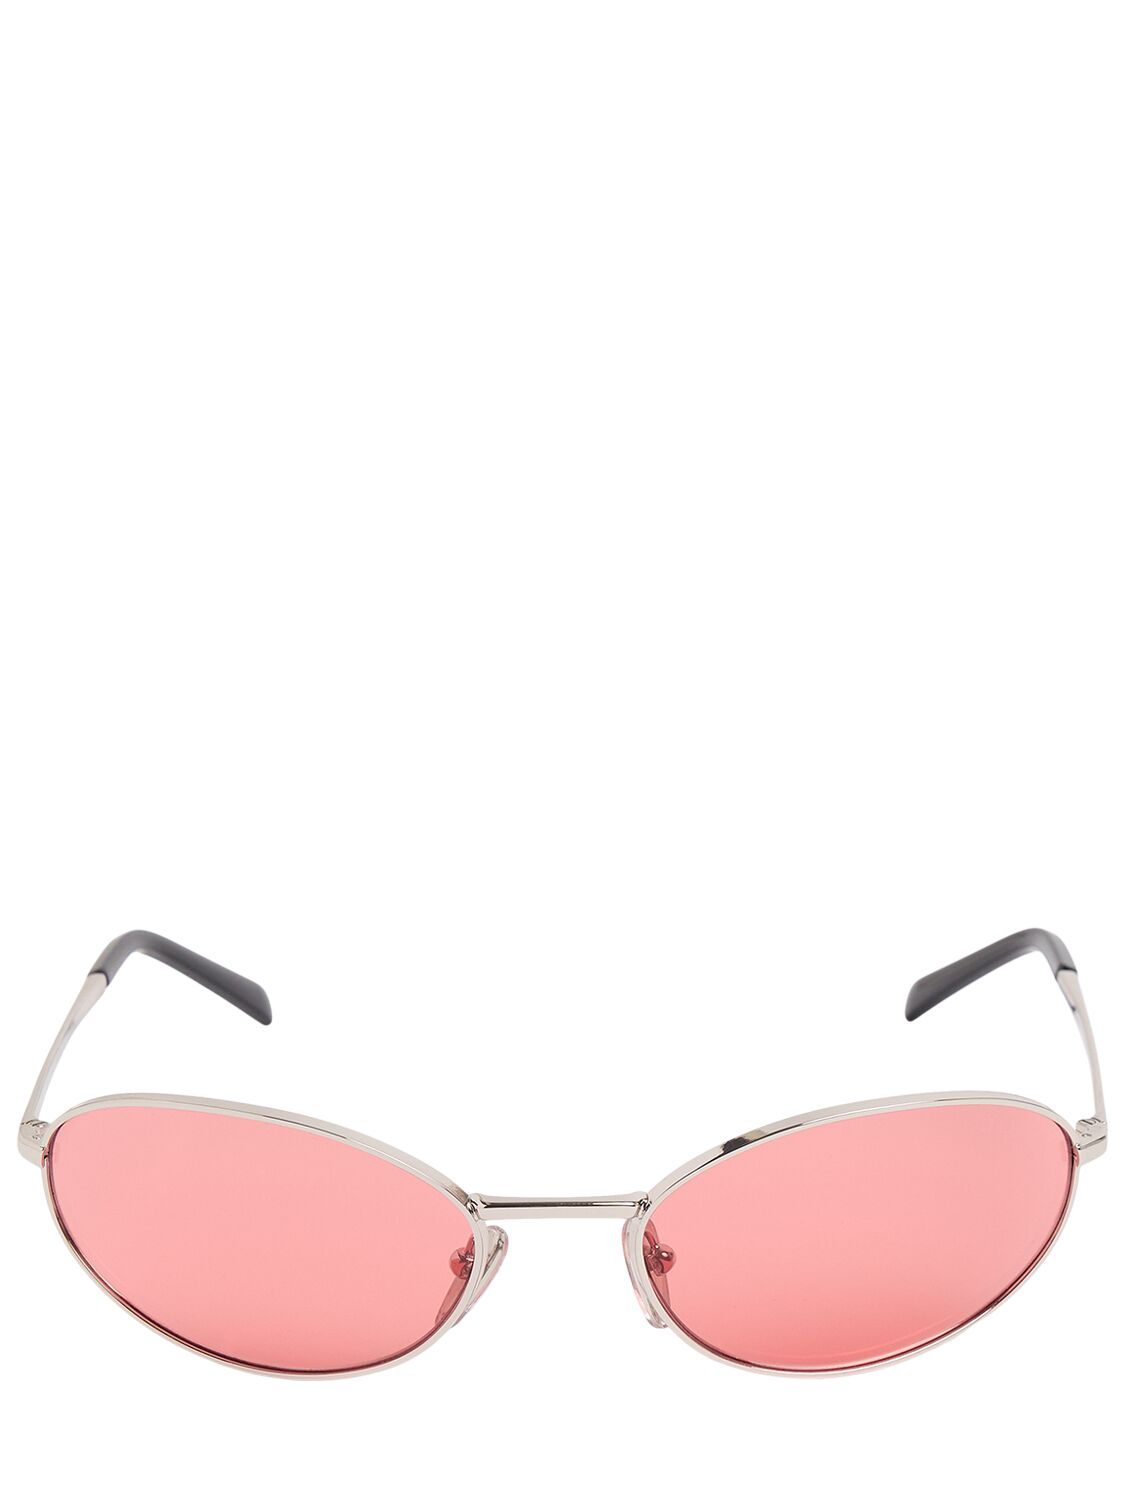 Prada Round Metal Sunglasses In Silver/pink